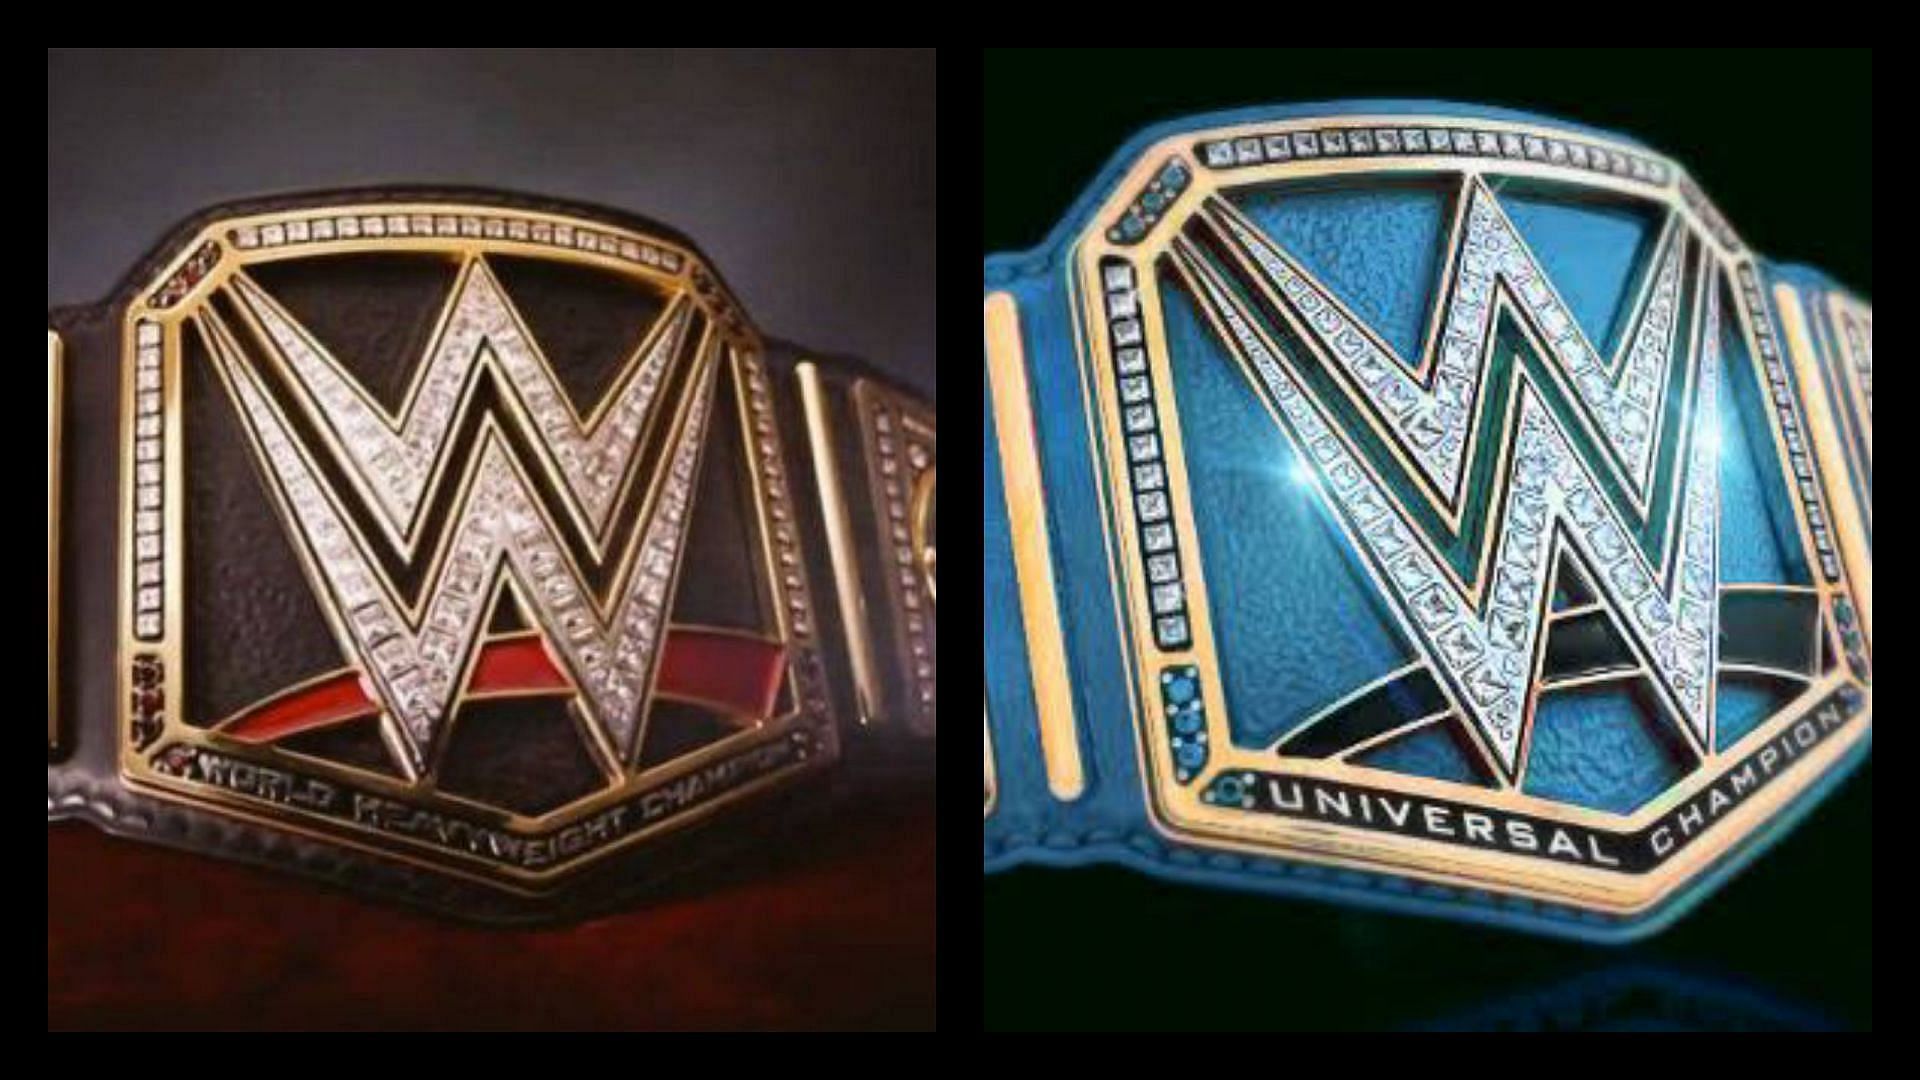 WWE Championship is a prestigious title